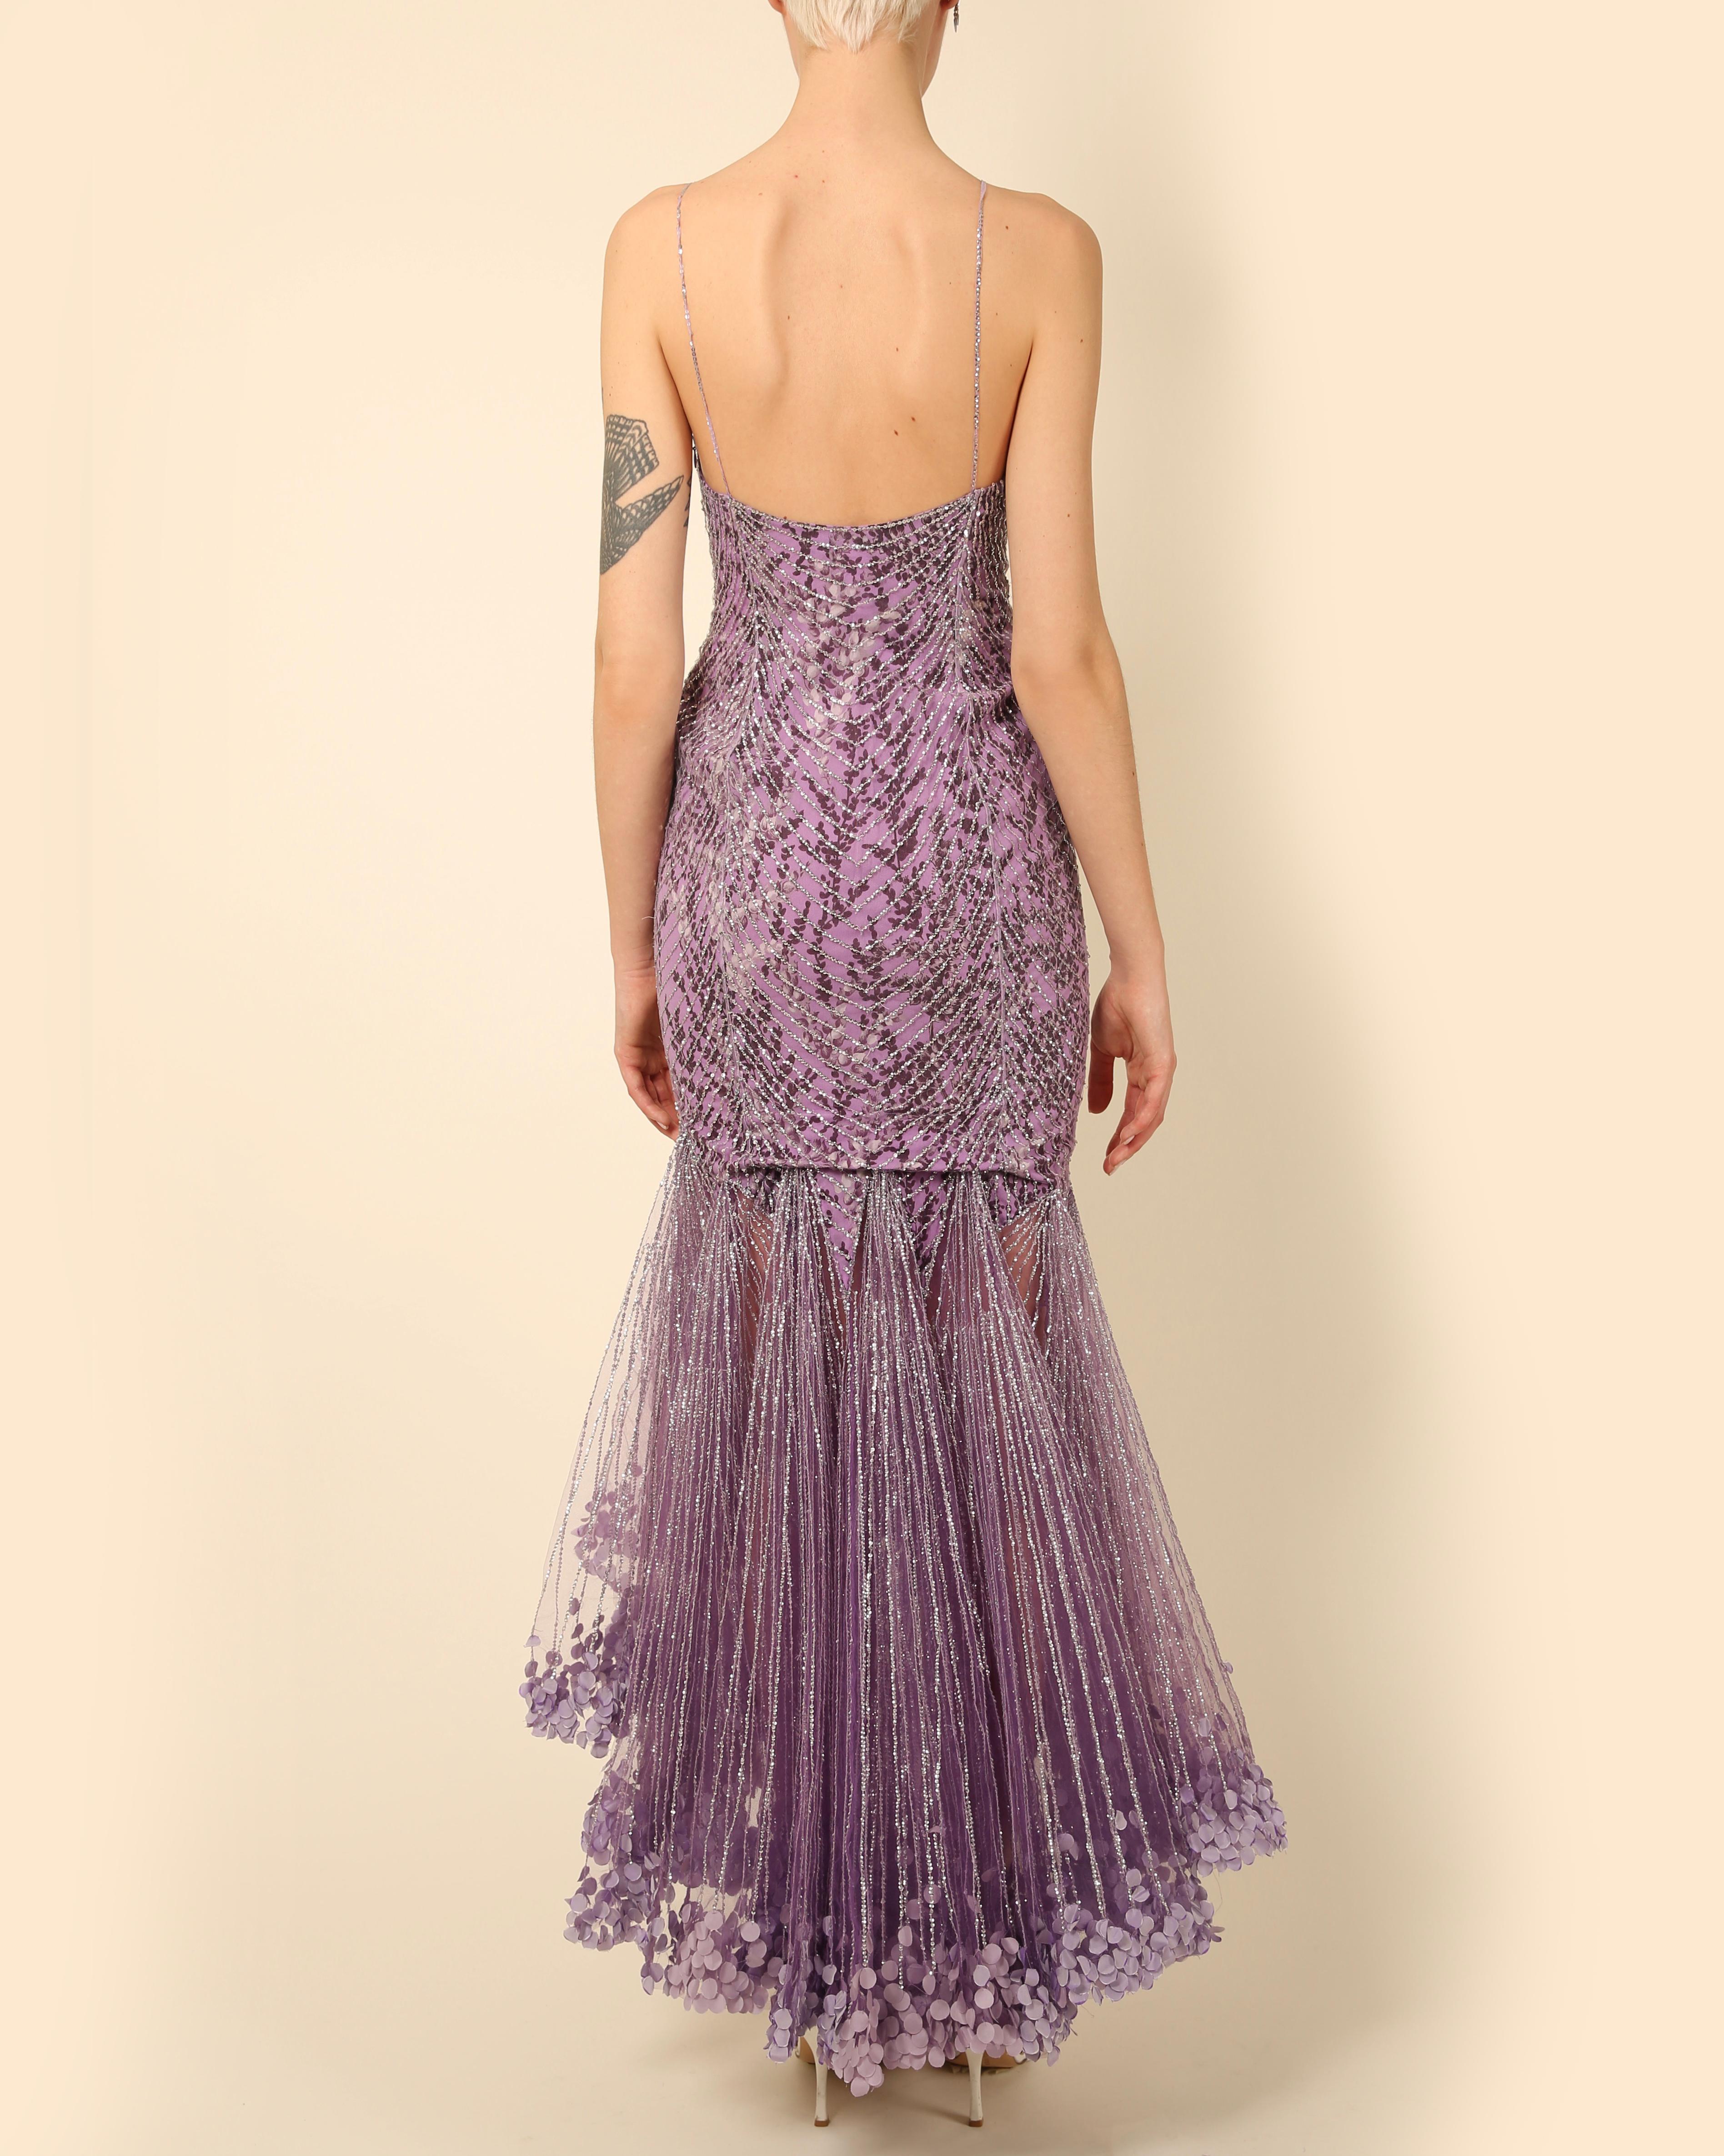 Atelier Versace Couture F/W01 purple black silver sequin low cut silk dress gown 8